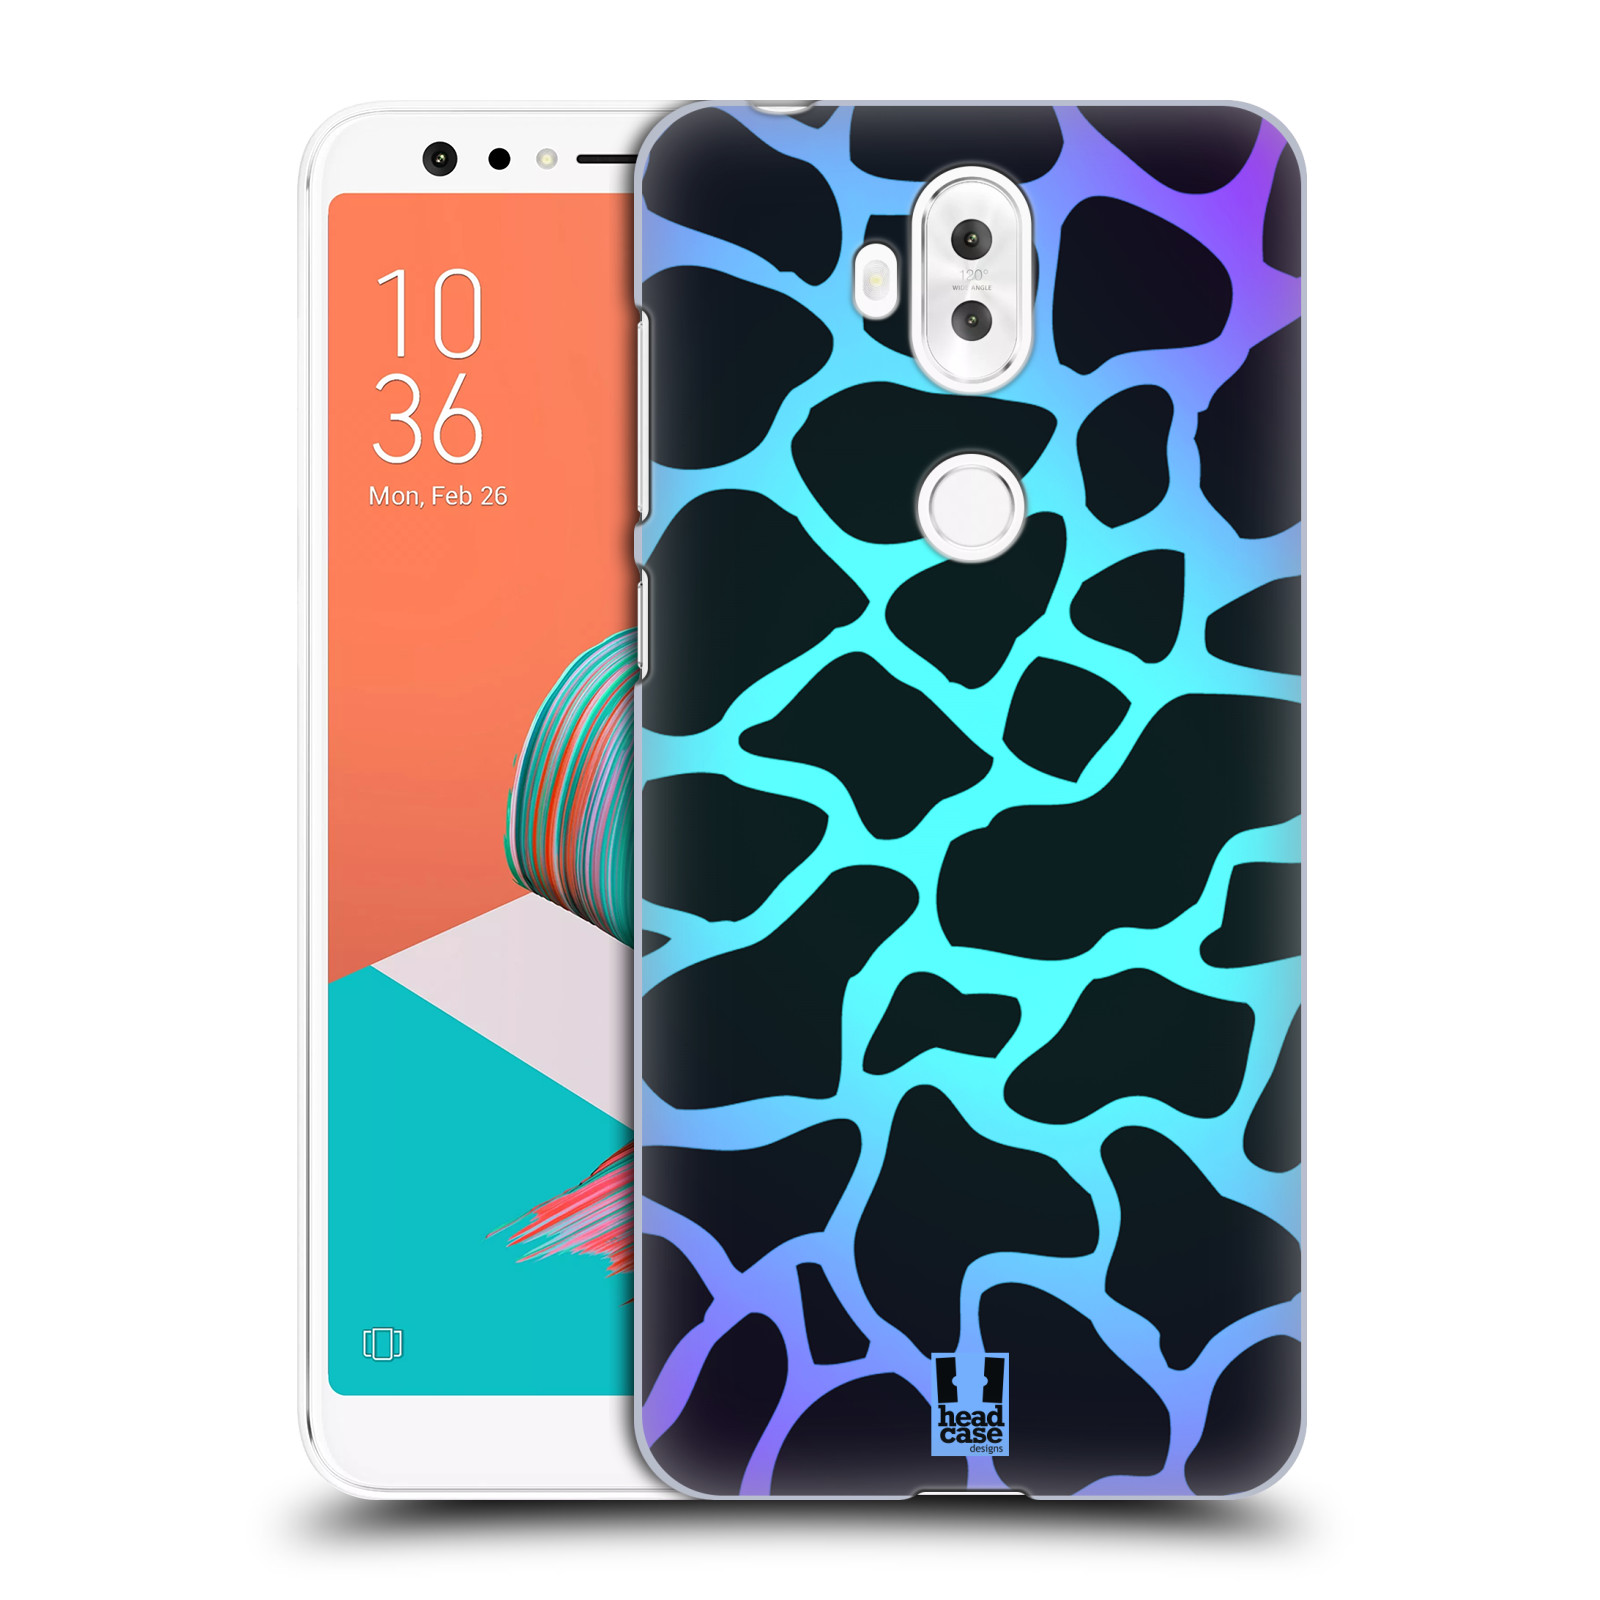 HEAD CASE plastový obal na mobil Asus Zenfone 5 LITE ZC600KL vzor Divočina zvíře tyrkysová žirafa magický vzor